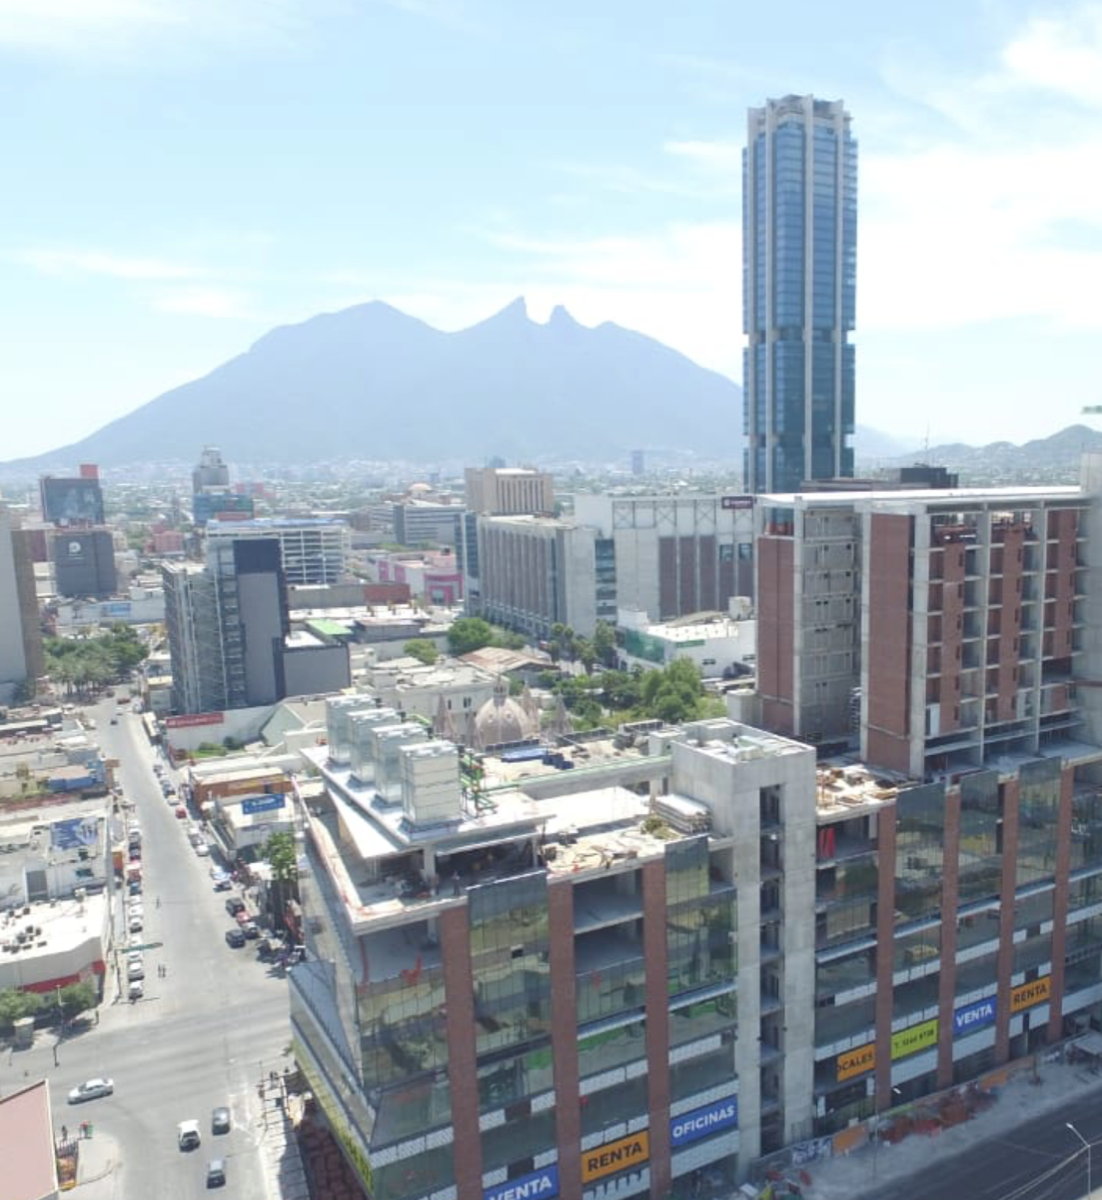 AllProperty - Local en renta, centro de Monterrey en plaza comercial.